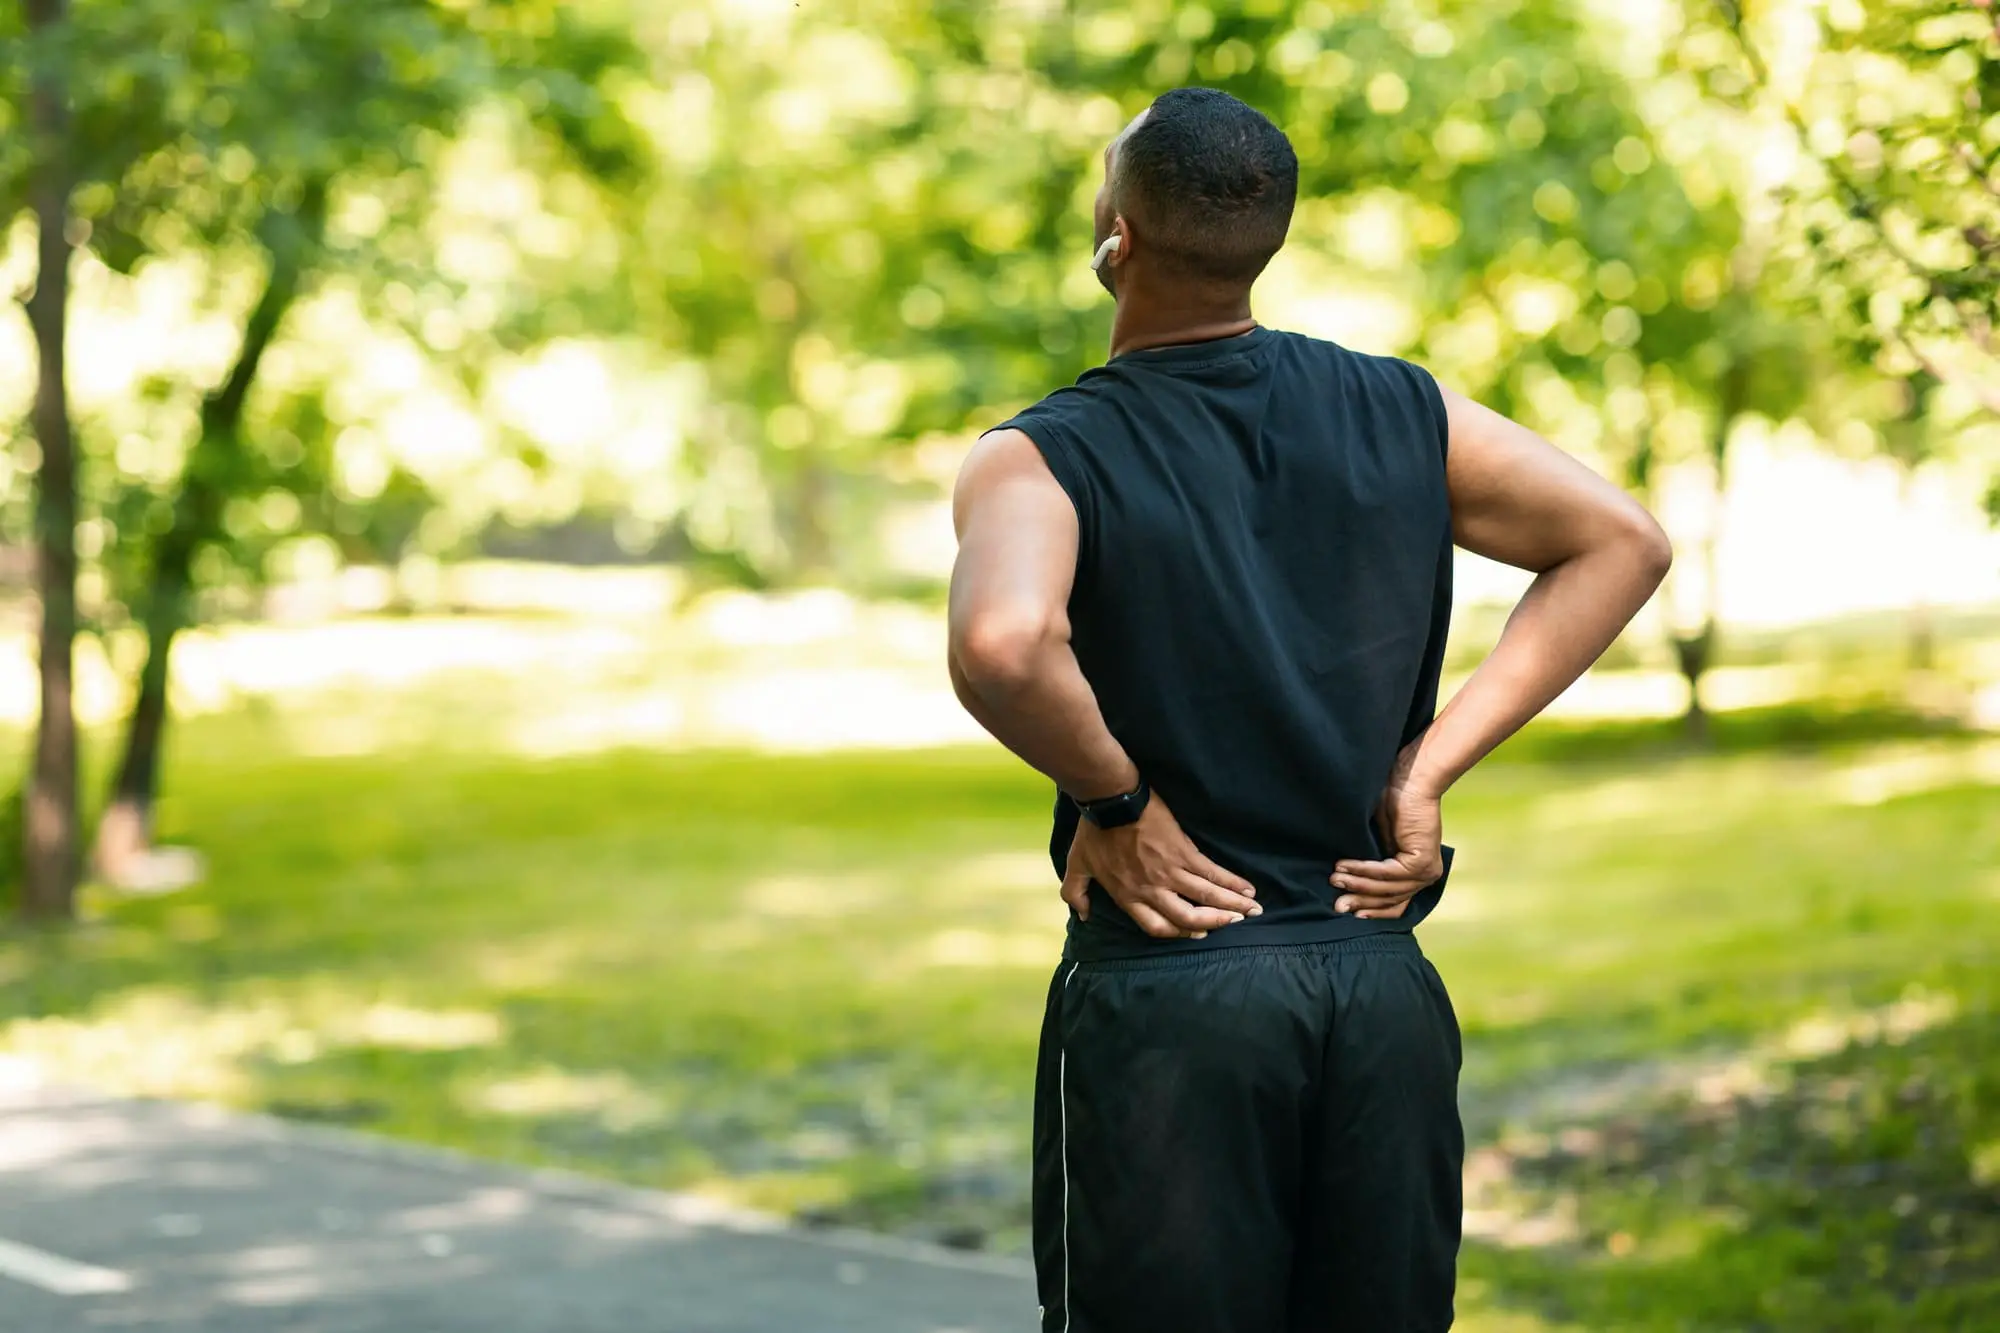 Millennial guy in sportswear suffering from back pain wgilejogging at park, empty space